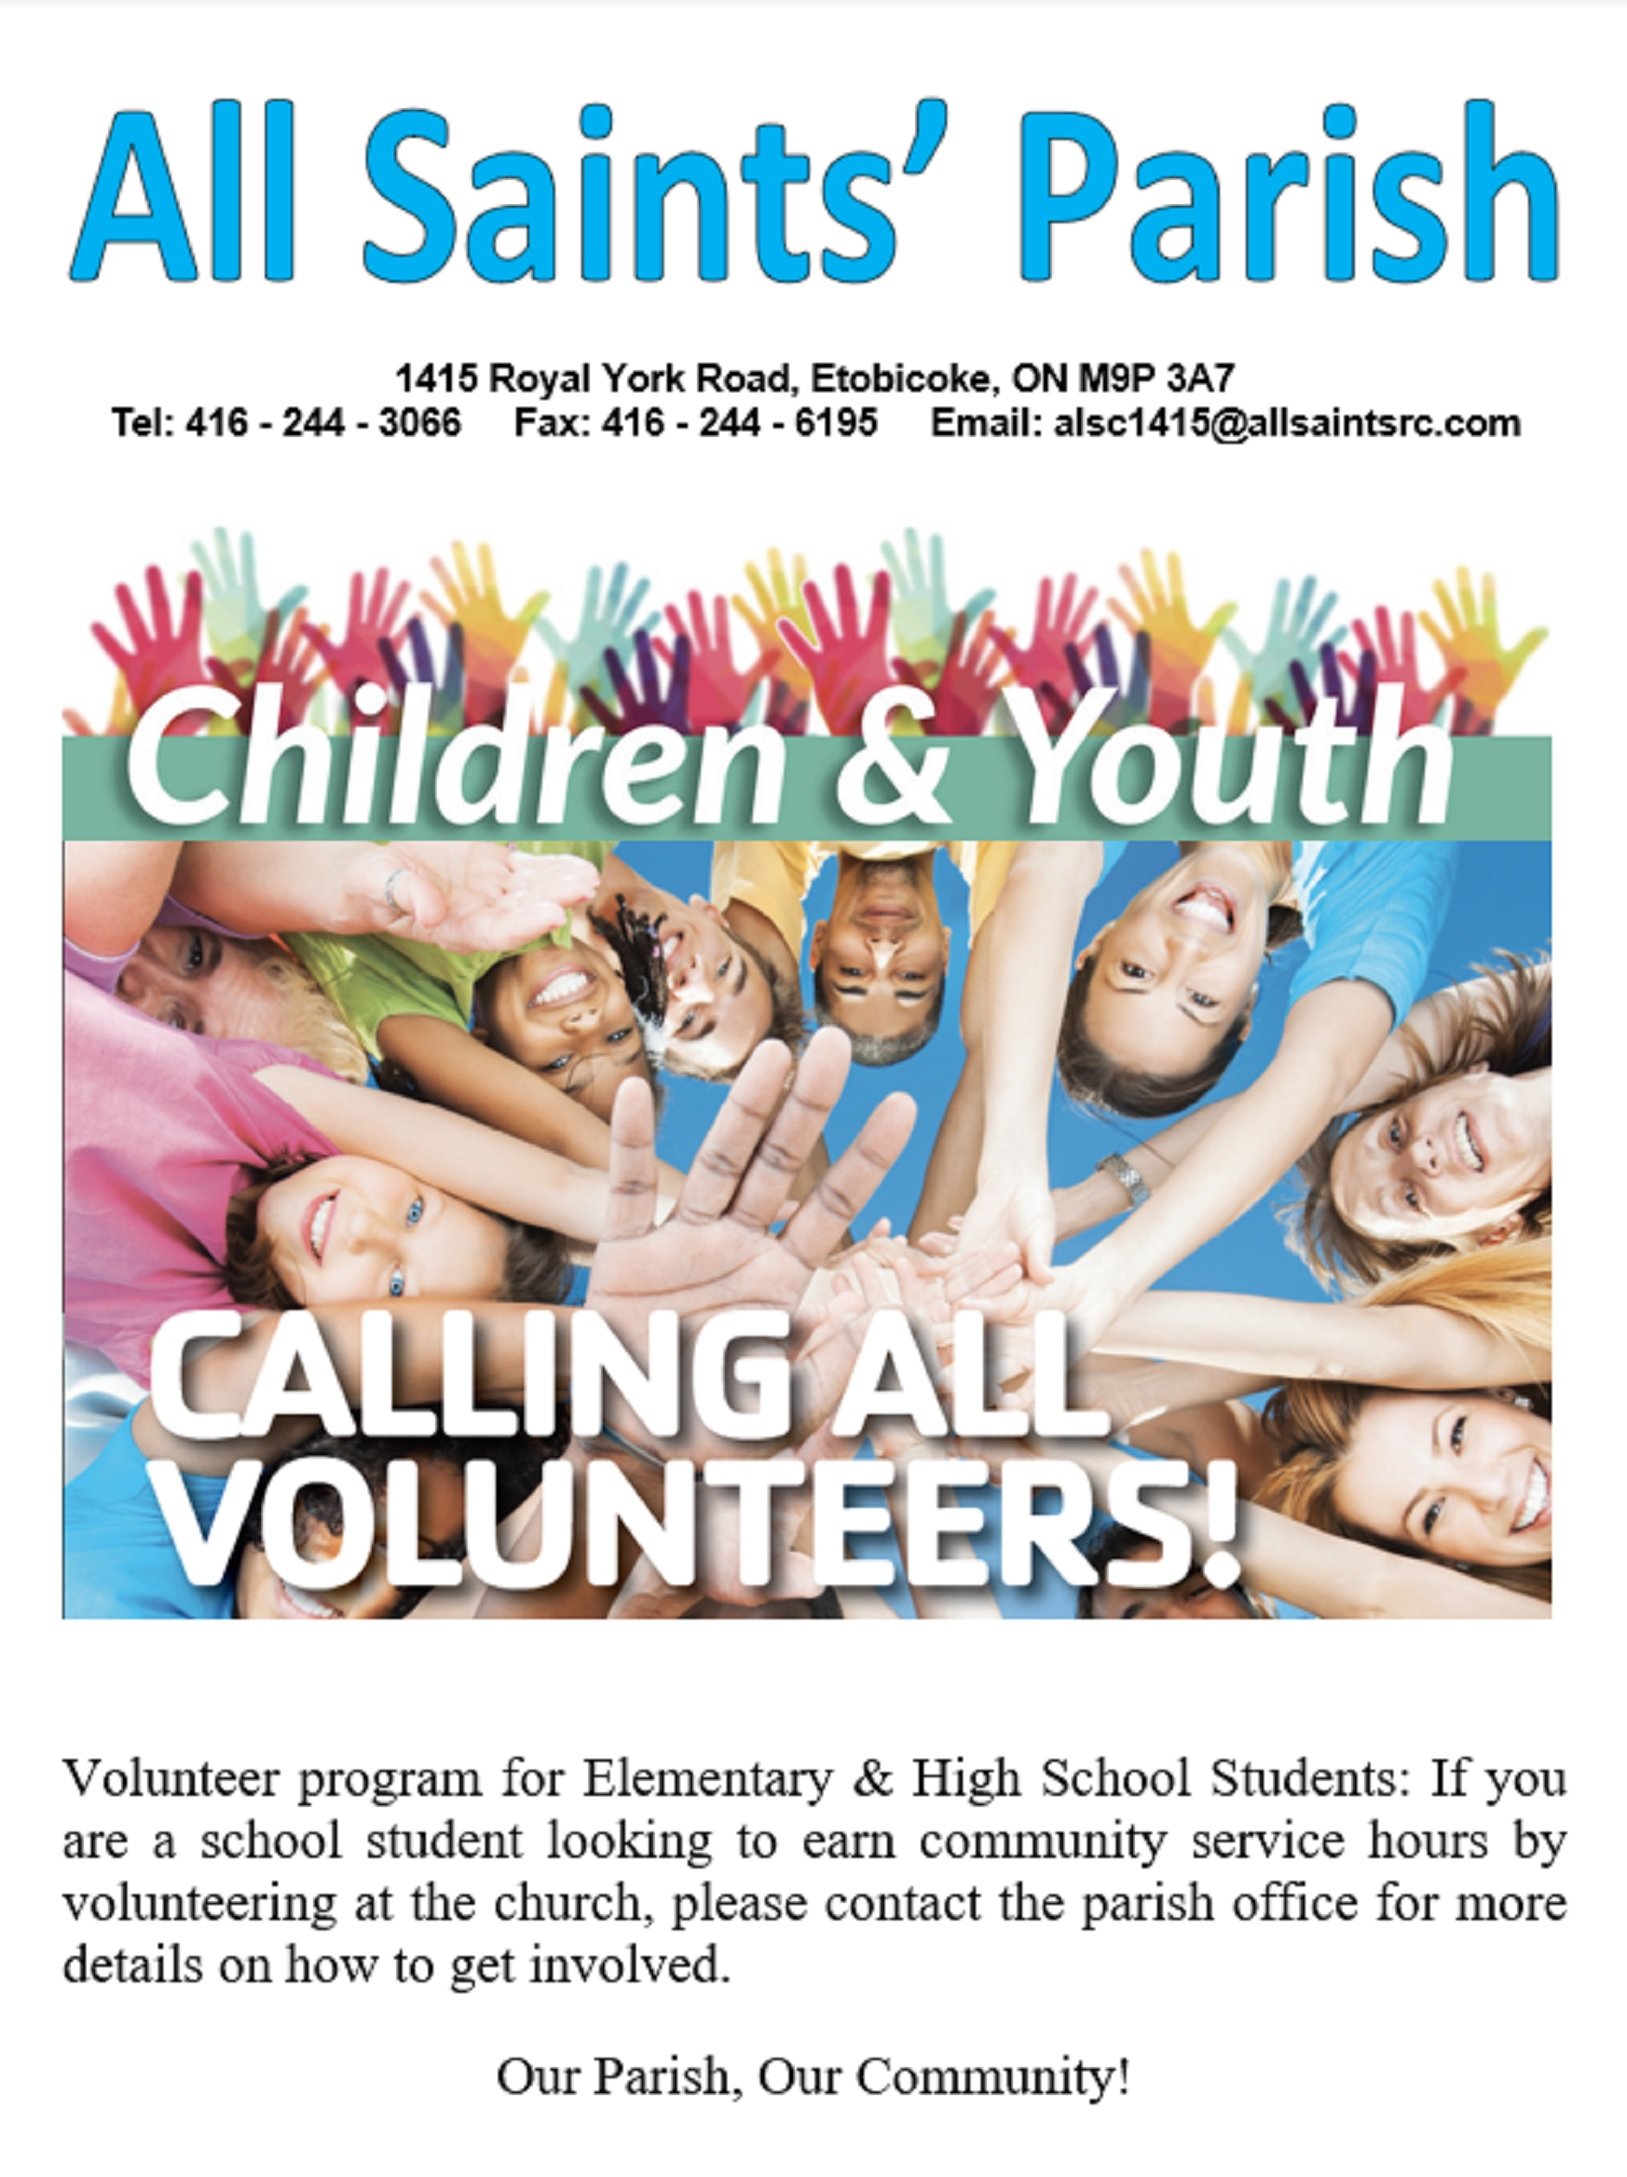 Volunteer program for Elementary & High School Students